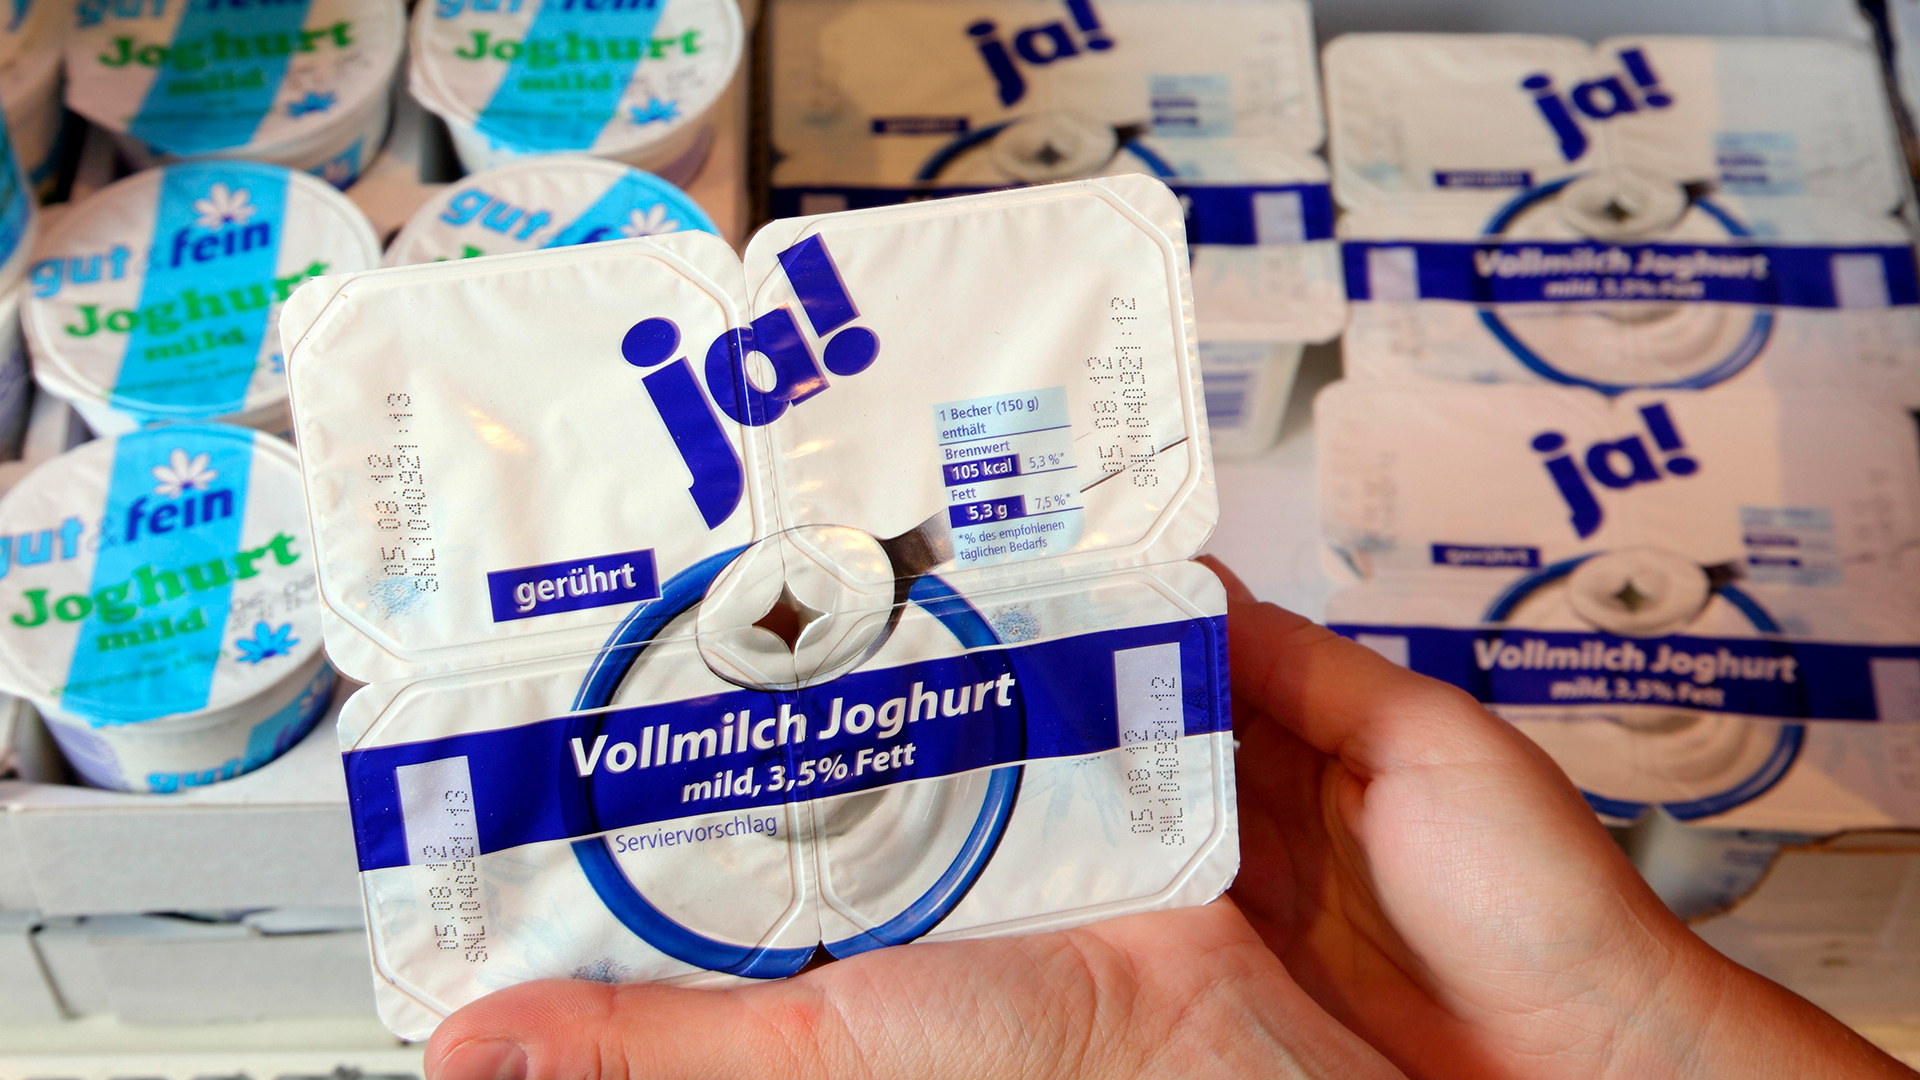 Joghurt der Ja-Marke | picture alliance / imageBROKER